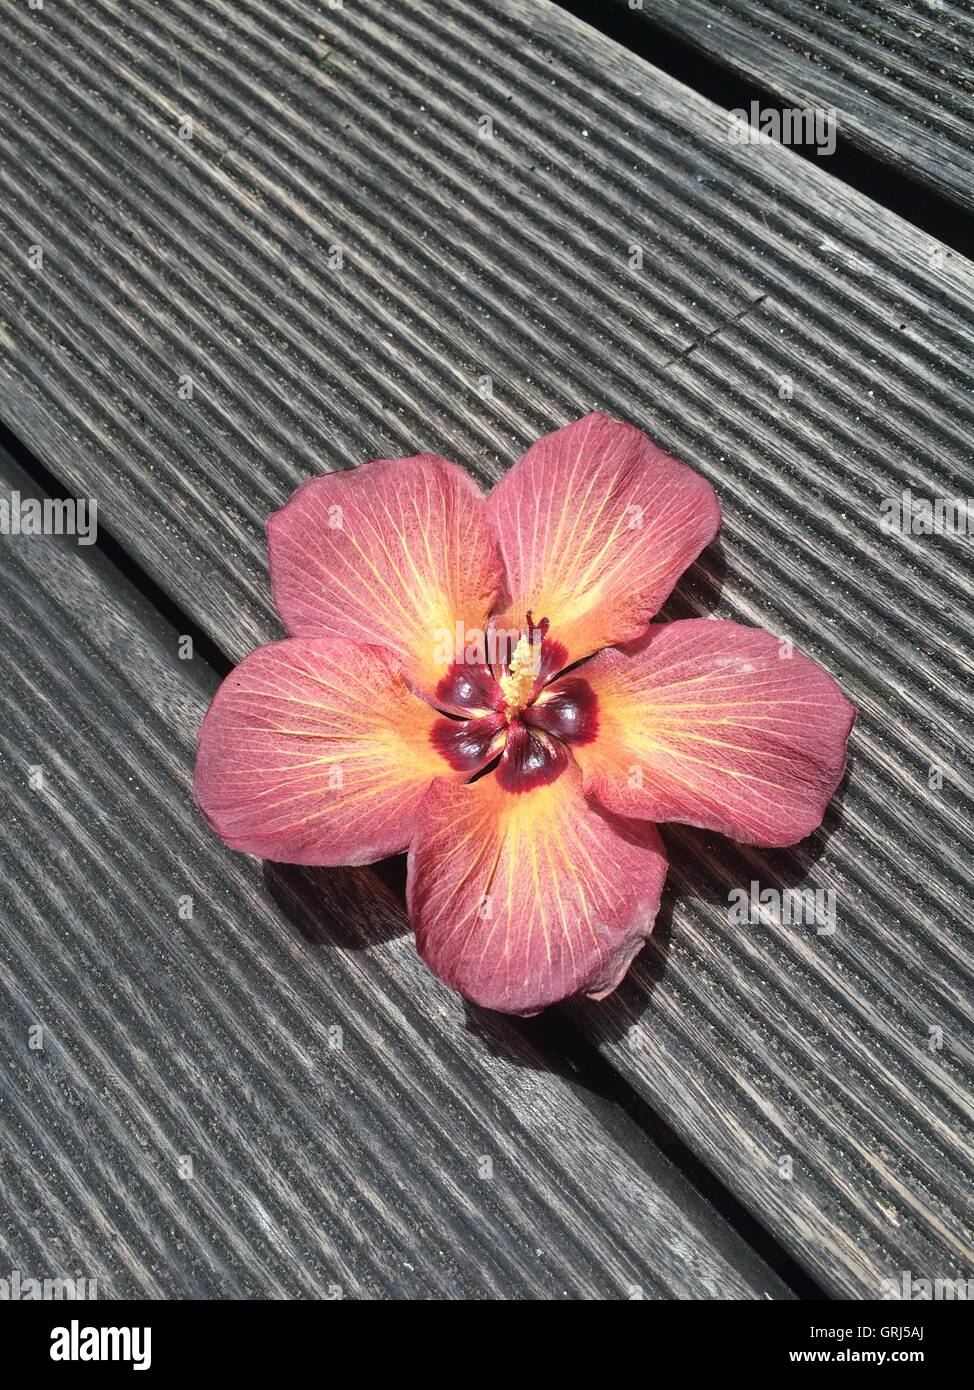 Peach coloured stripey flower on wooden decking Stock Photo